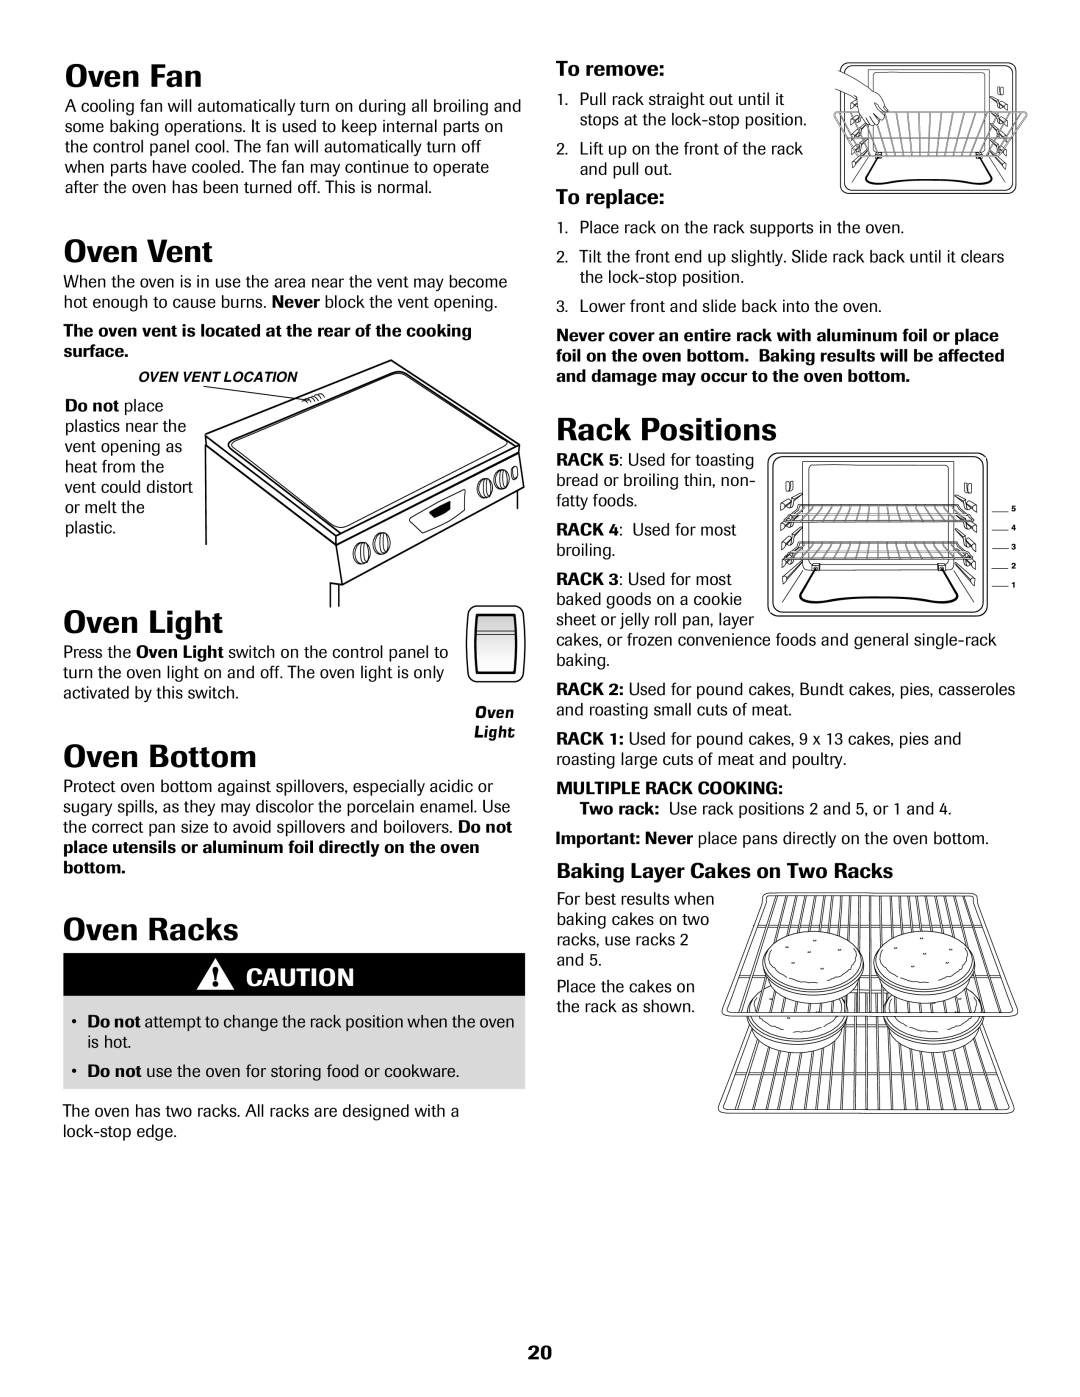 Maytag 500 Oven Fan, Oven Vent, Oven Light, Oven Bottom, Oven Racks, Rack Positions, Baking Layer Cakes on Two Racks 